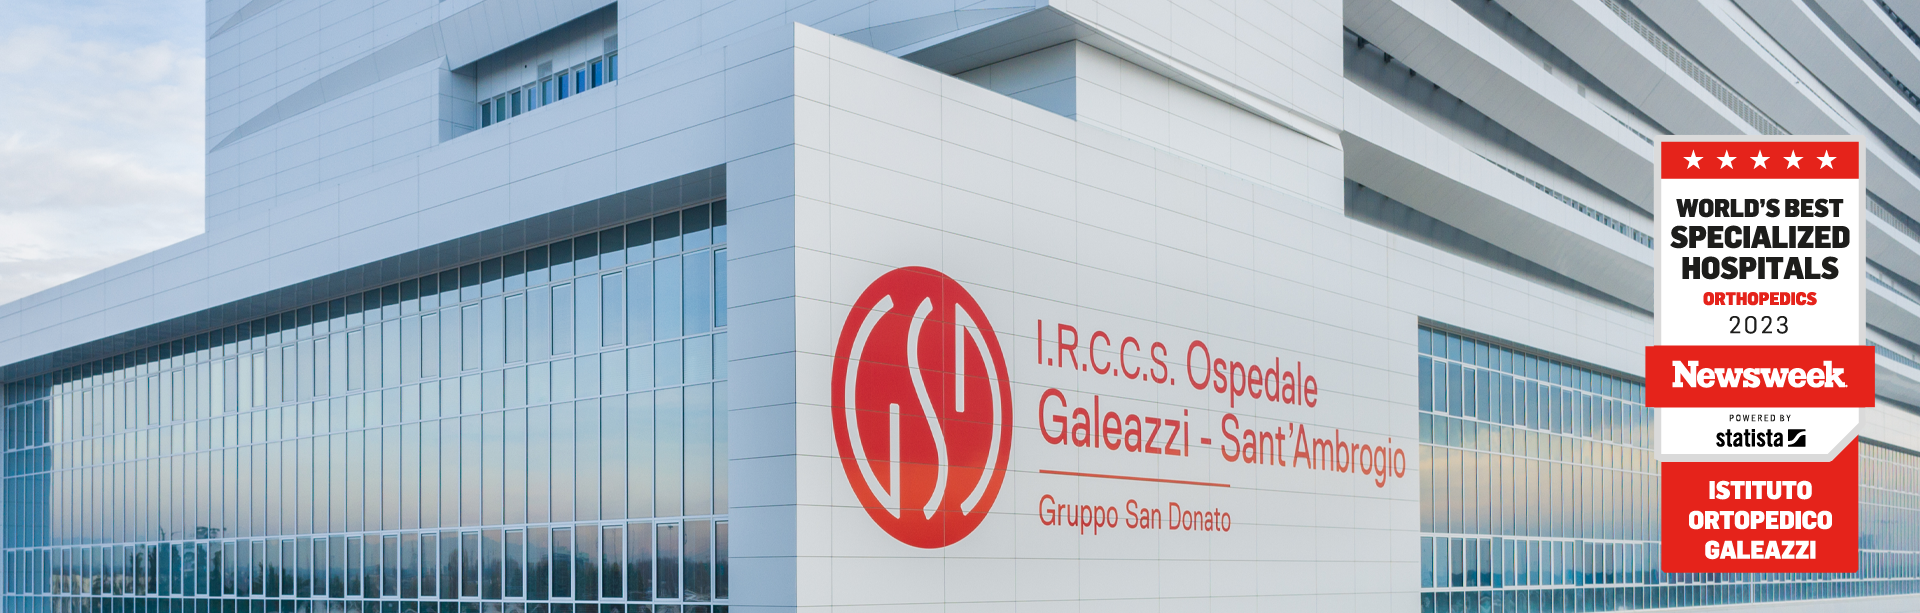 IRCCS Ospedale Galeazzi - Sant'Ambrogio